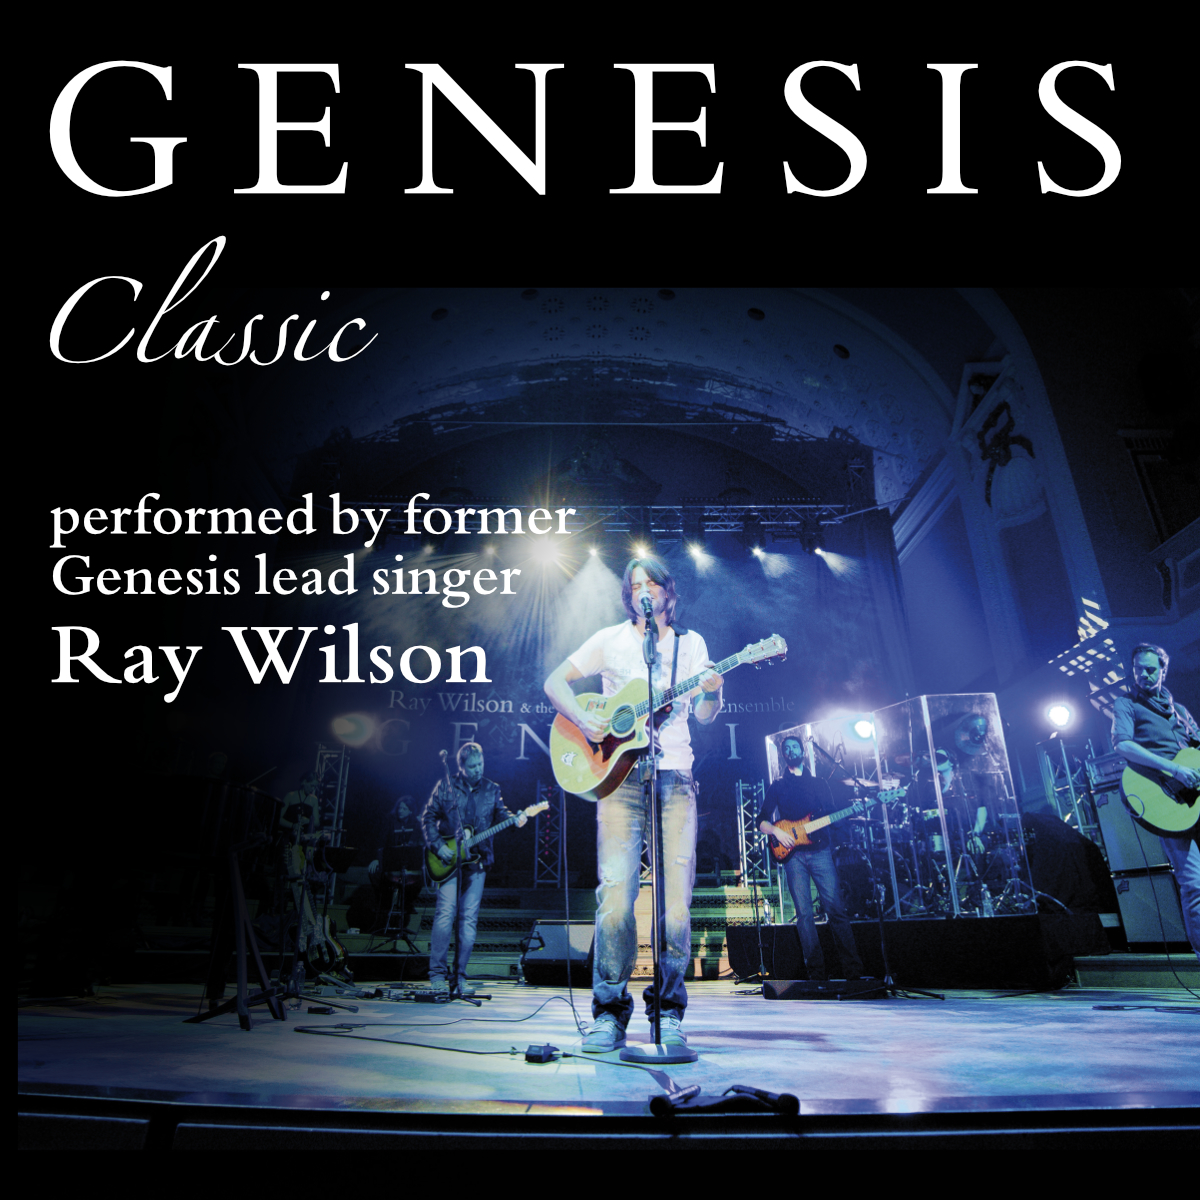 GENESIS CLASSIC/performed by former Genesis lead singer Ray Wilson/- 
Praha
 -Lucerna Music Bar
 
Praha